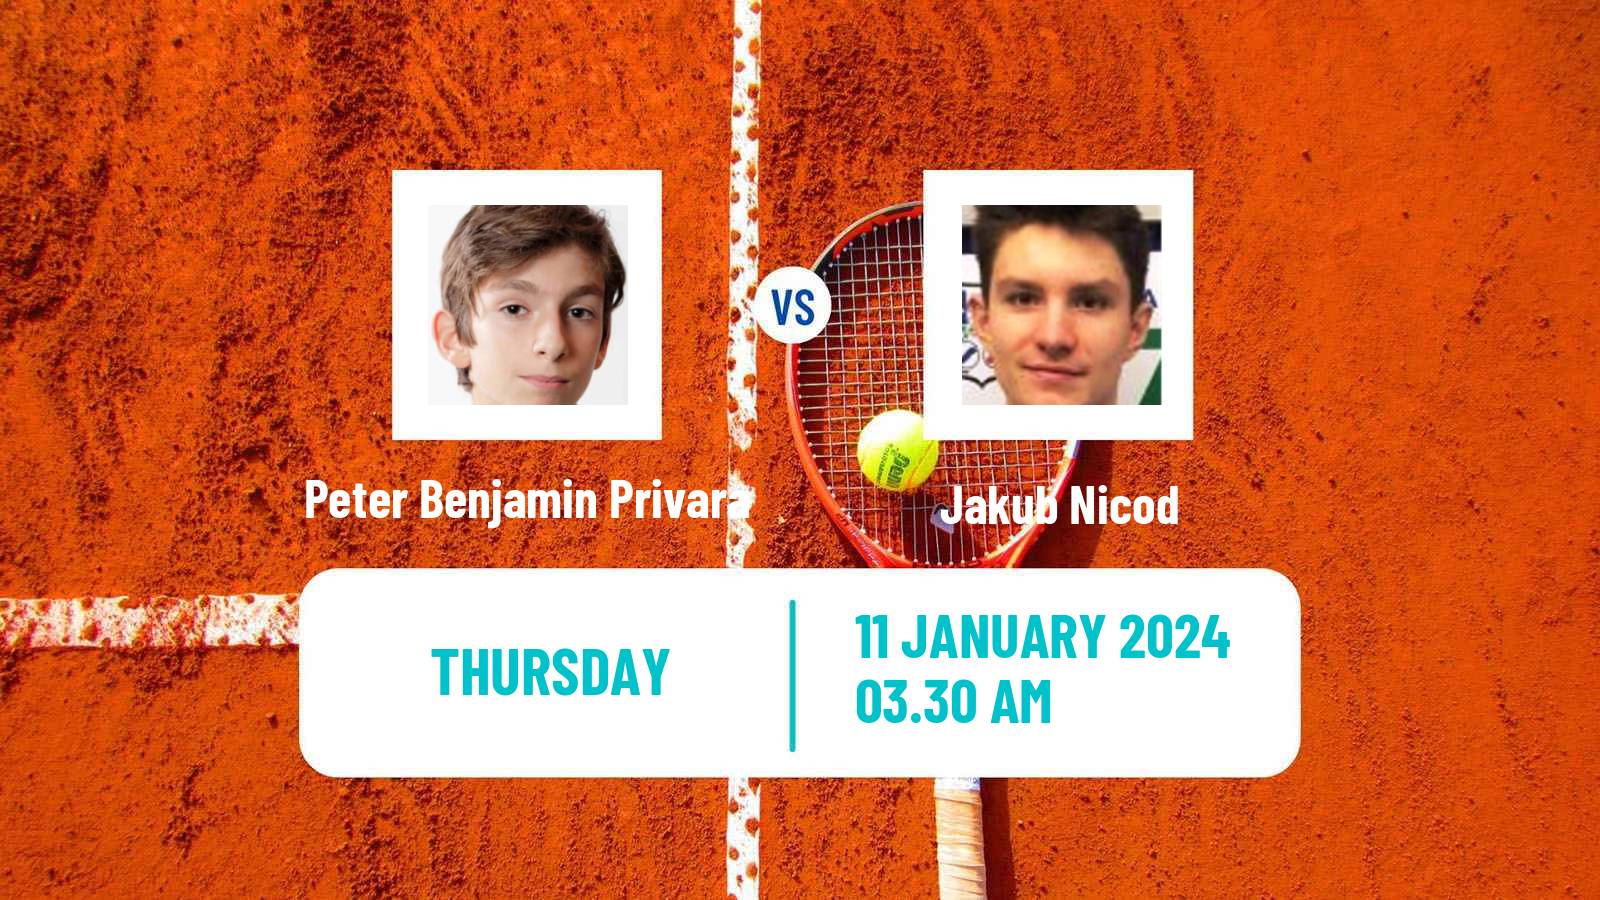 Tennis ITF M15 Monastir 2 Men Peter Benjamin Privara - Jakub Nicod